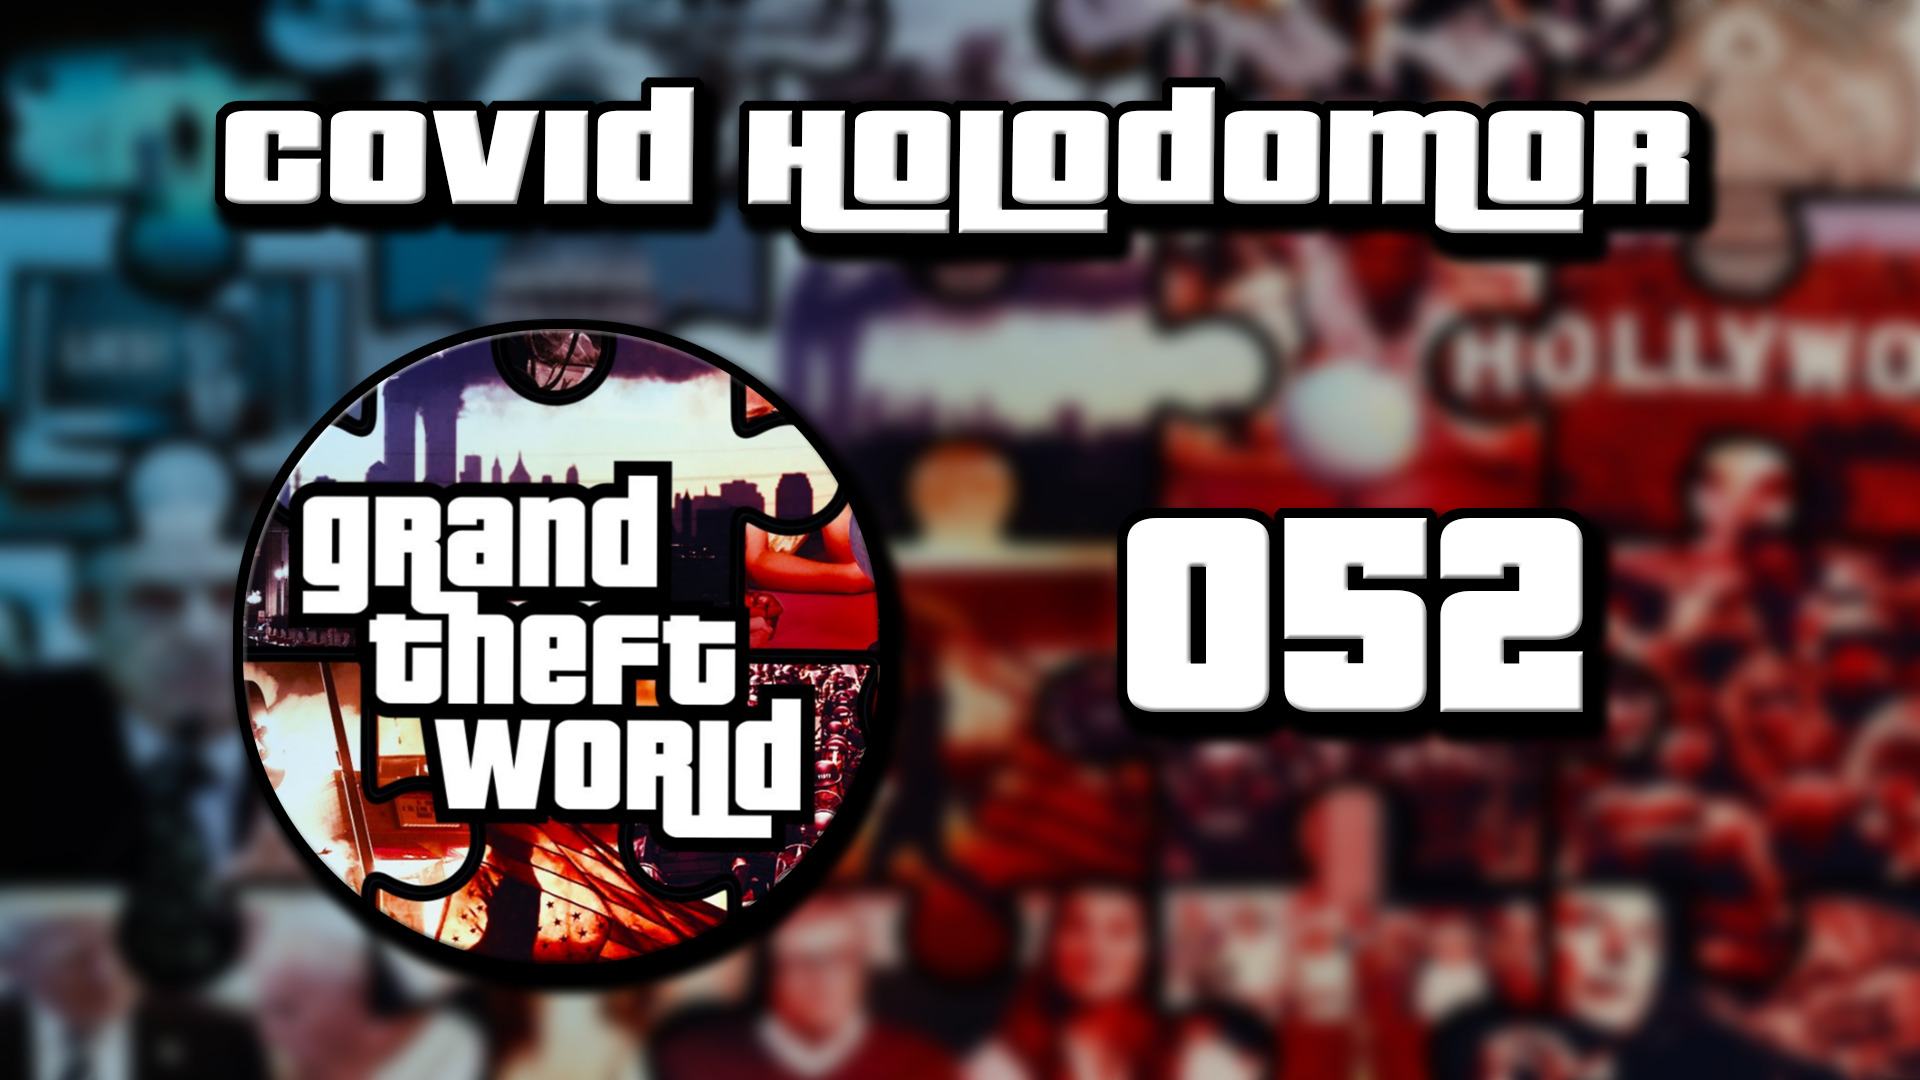 Grand Theft World Podcast 052 | Covid Holodomor